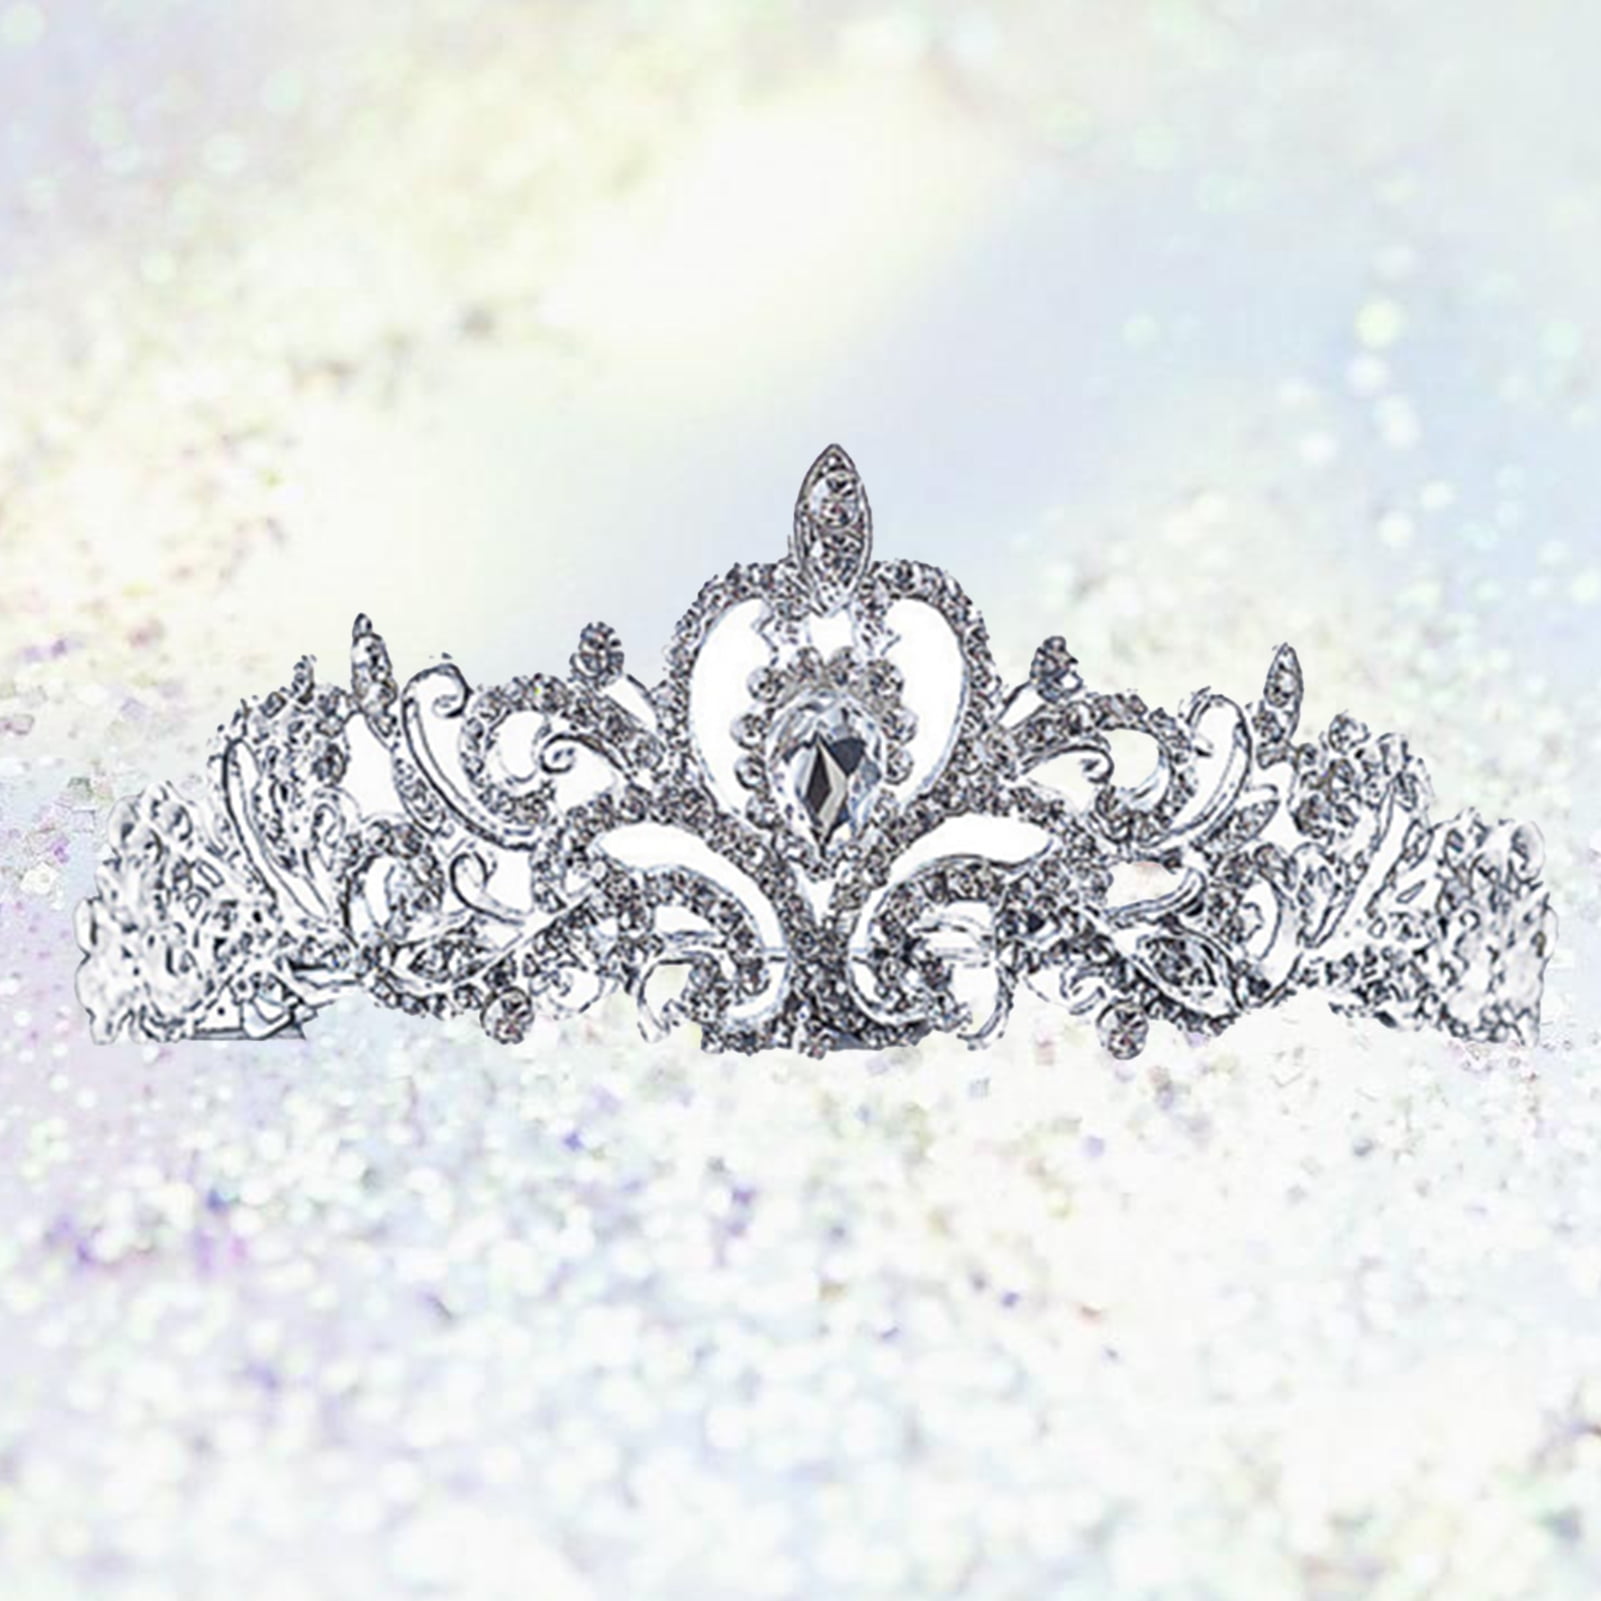 21cm High Crystal Huge Tiara Crown Wedding Bridal Party Pageant Prom 